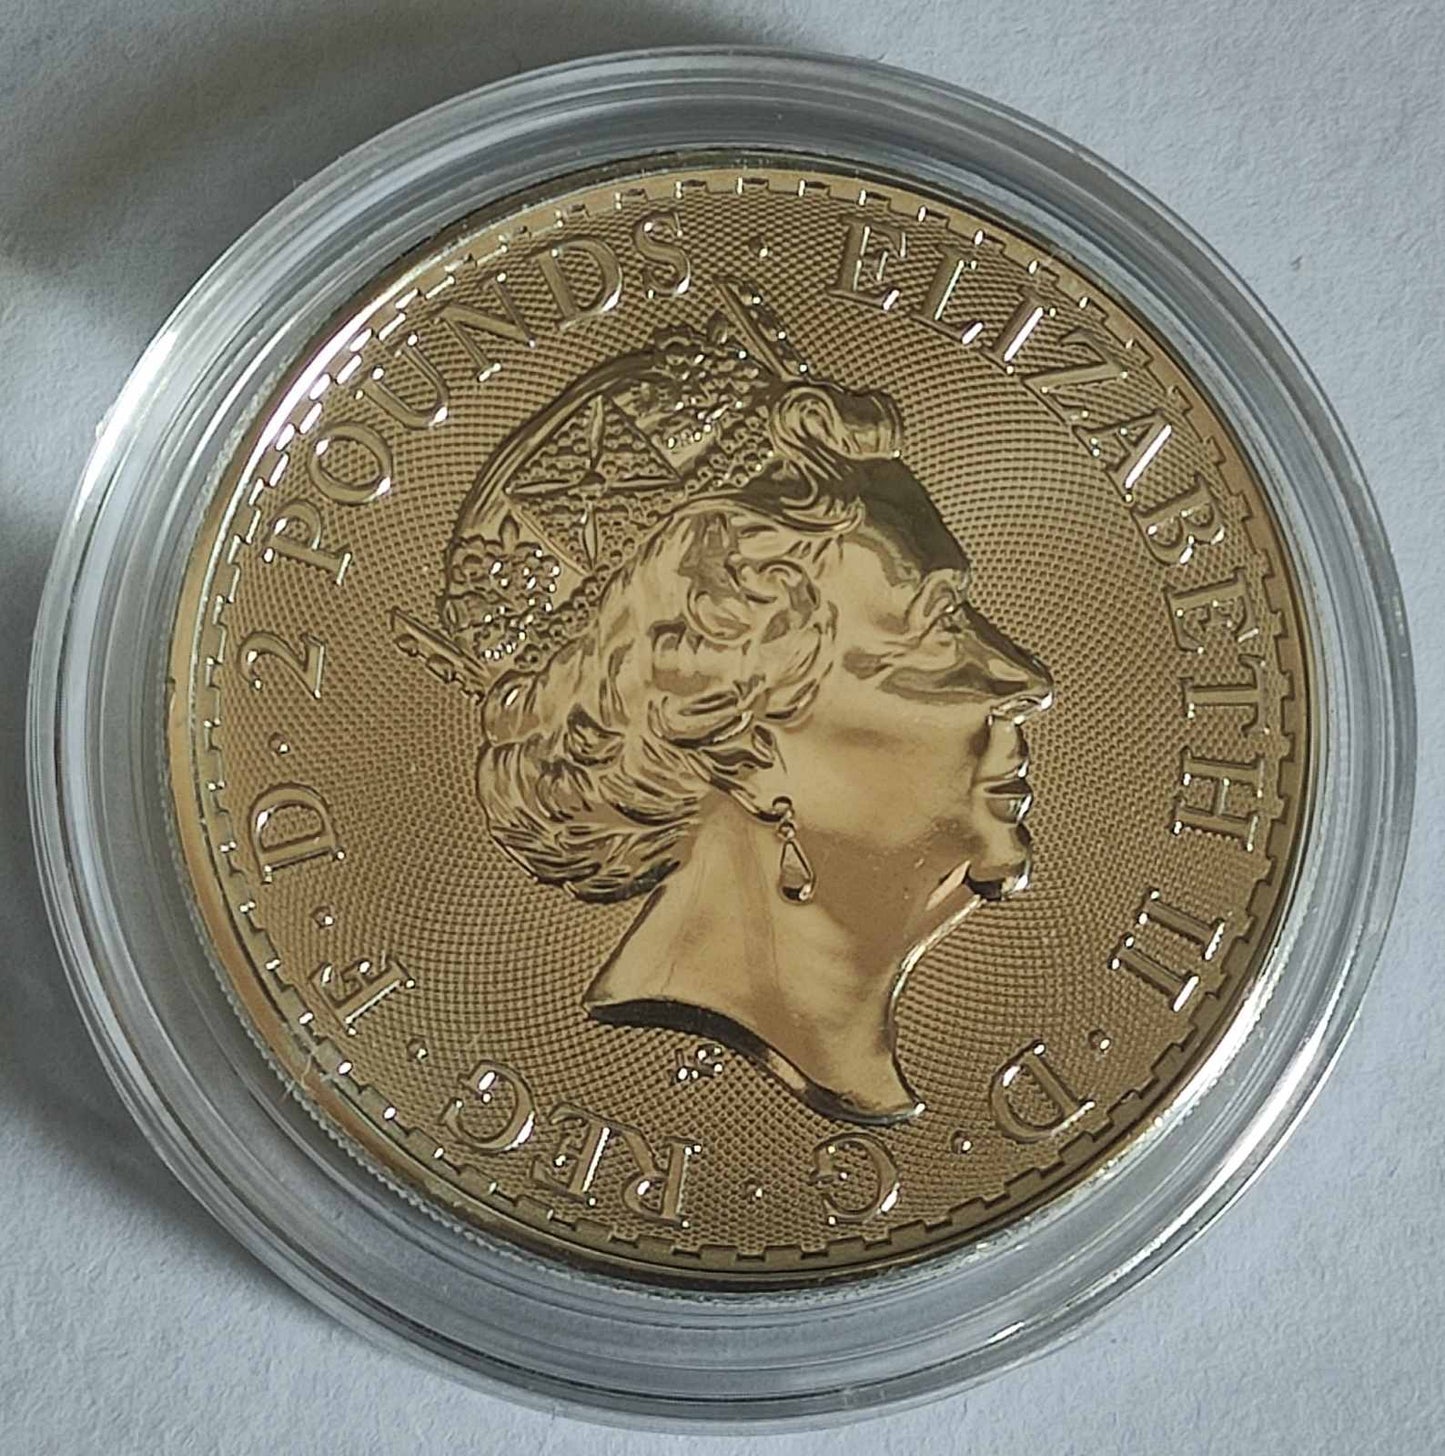 2023 Great Britain Britannia (Queen Elizabeth) 1 oz Silver Coin in Capsule